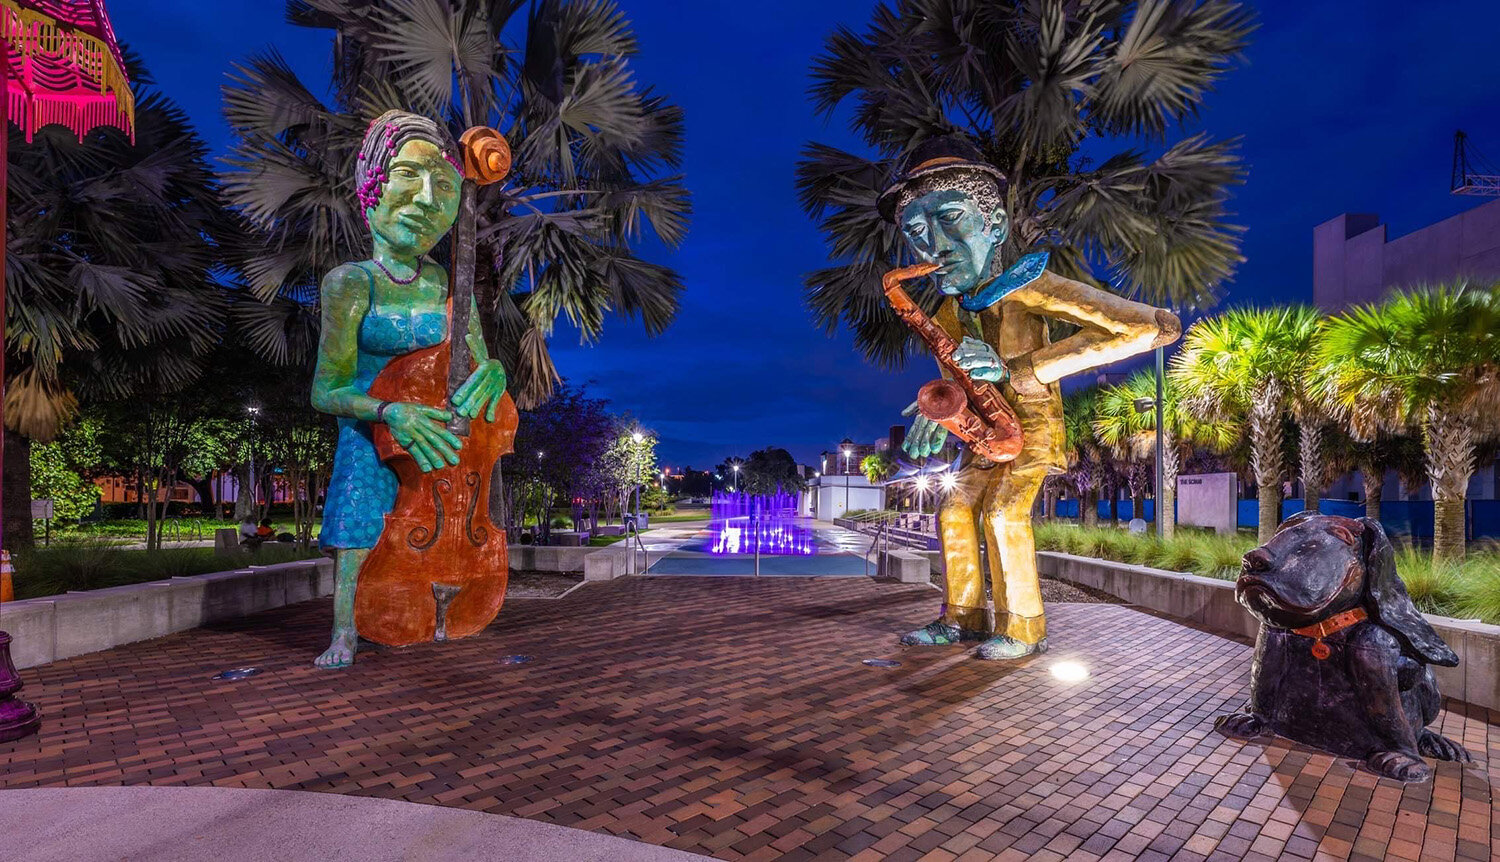 Perry Harvey Park James Simon Sculptures Tampa.jpg